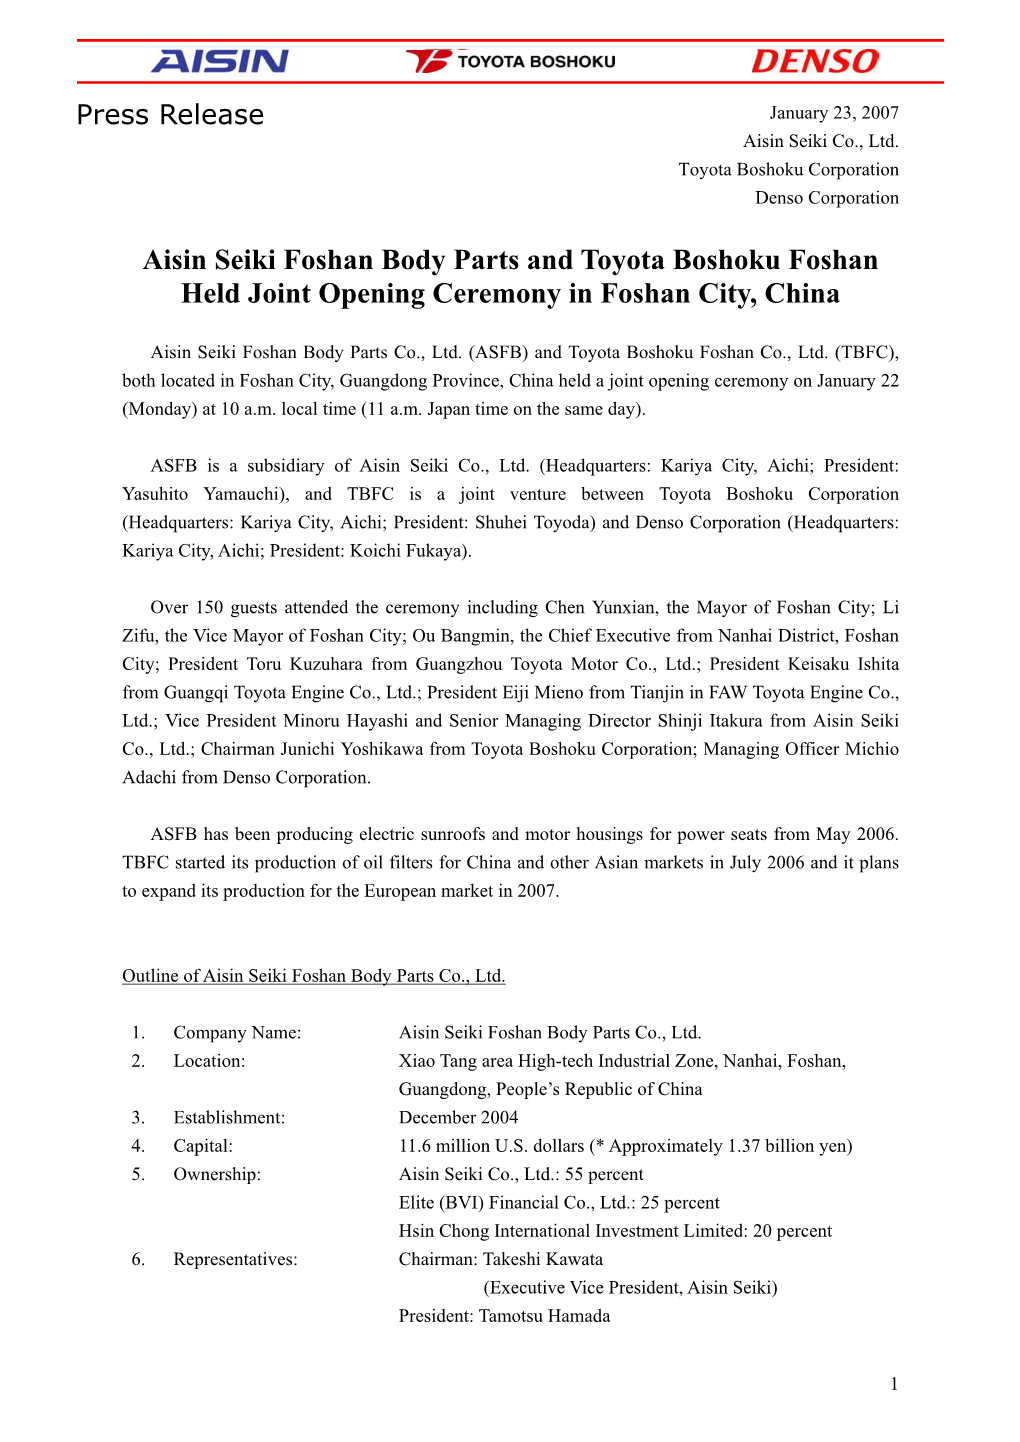 Aisin Seiki Foshan Body Parts and Toyota Boshoku Foshan Held Joint Opening Ceremony in Foshan City, China